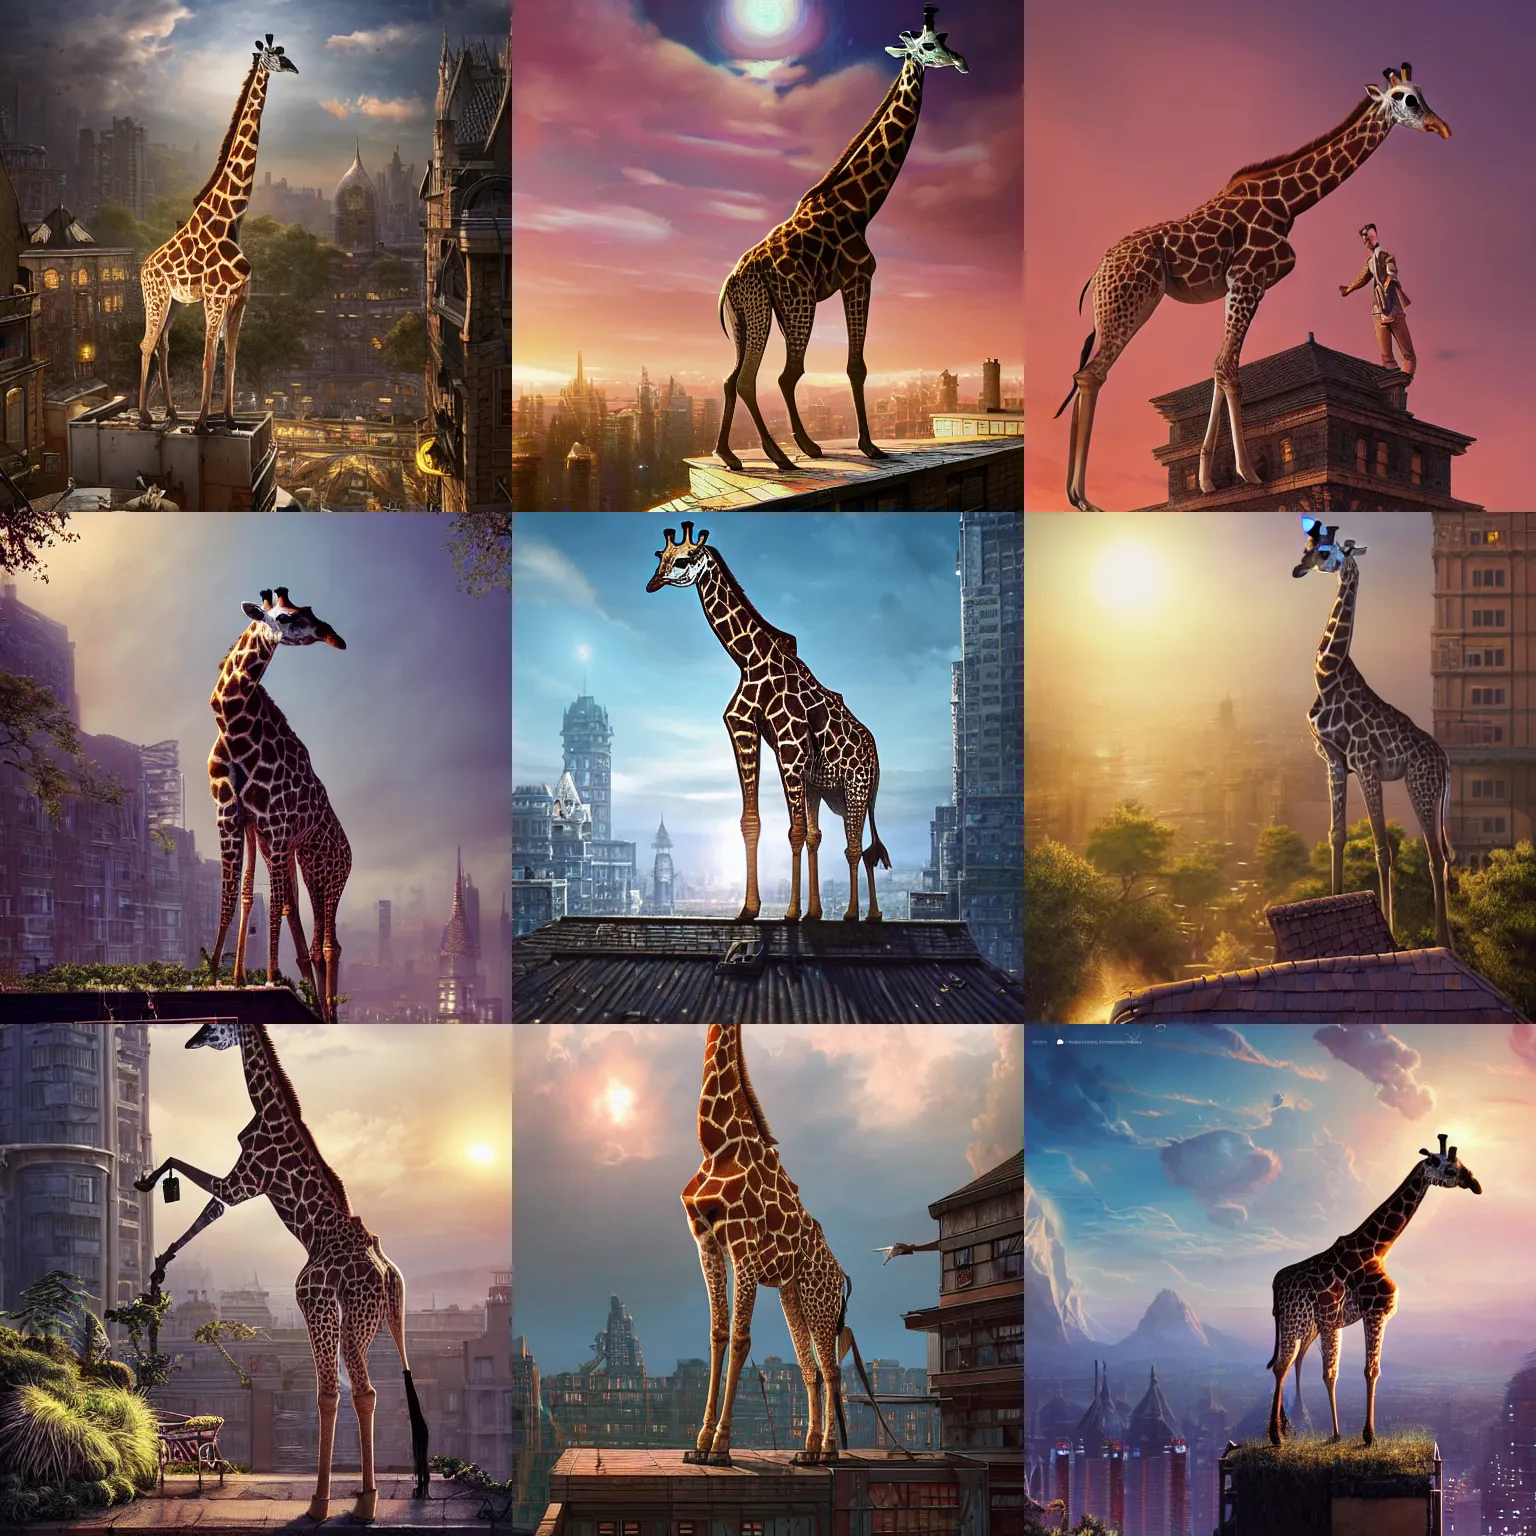 Prompt: giraffe standing on the rooftop, fantasy, intricate, epic lighting, cinematic composition, hyper realistic, 8 k resolution, unreal engine 5, by artgerm, tooth wu, dan mumford, beeple, wlop, rossdraws, james jean, andrei riabovitchev, marc simonetti, yoshitaka amano, artstation